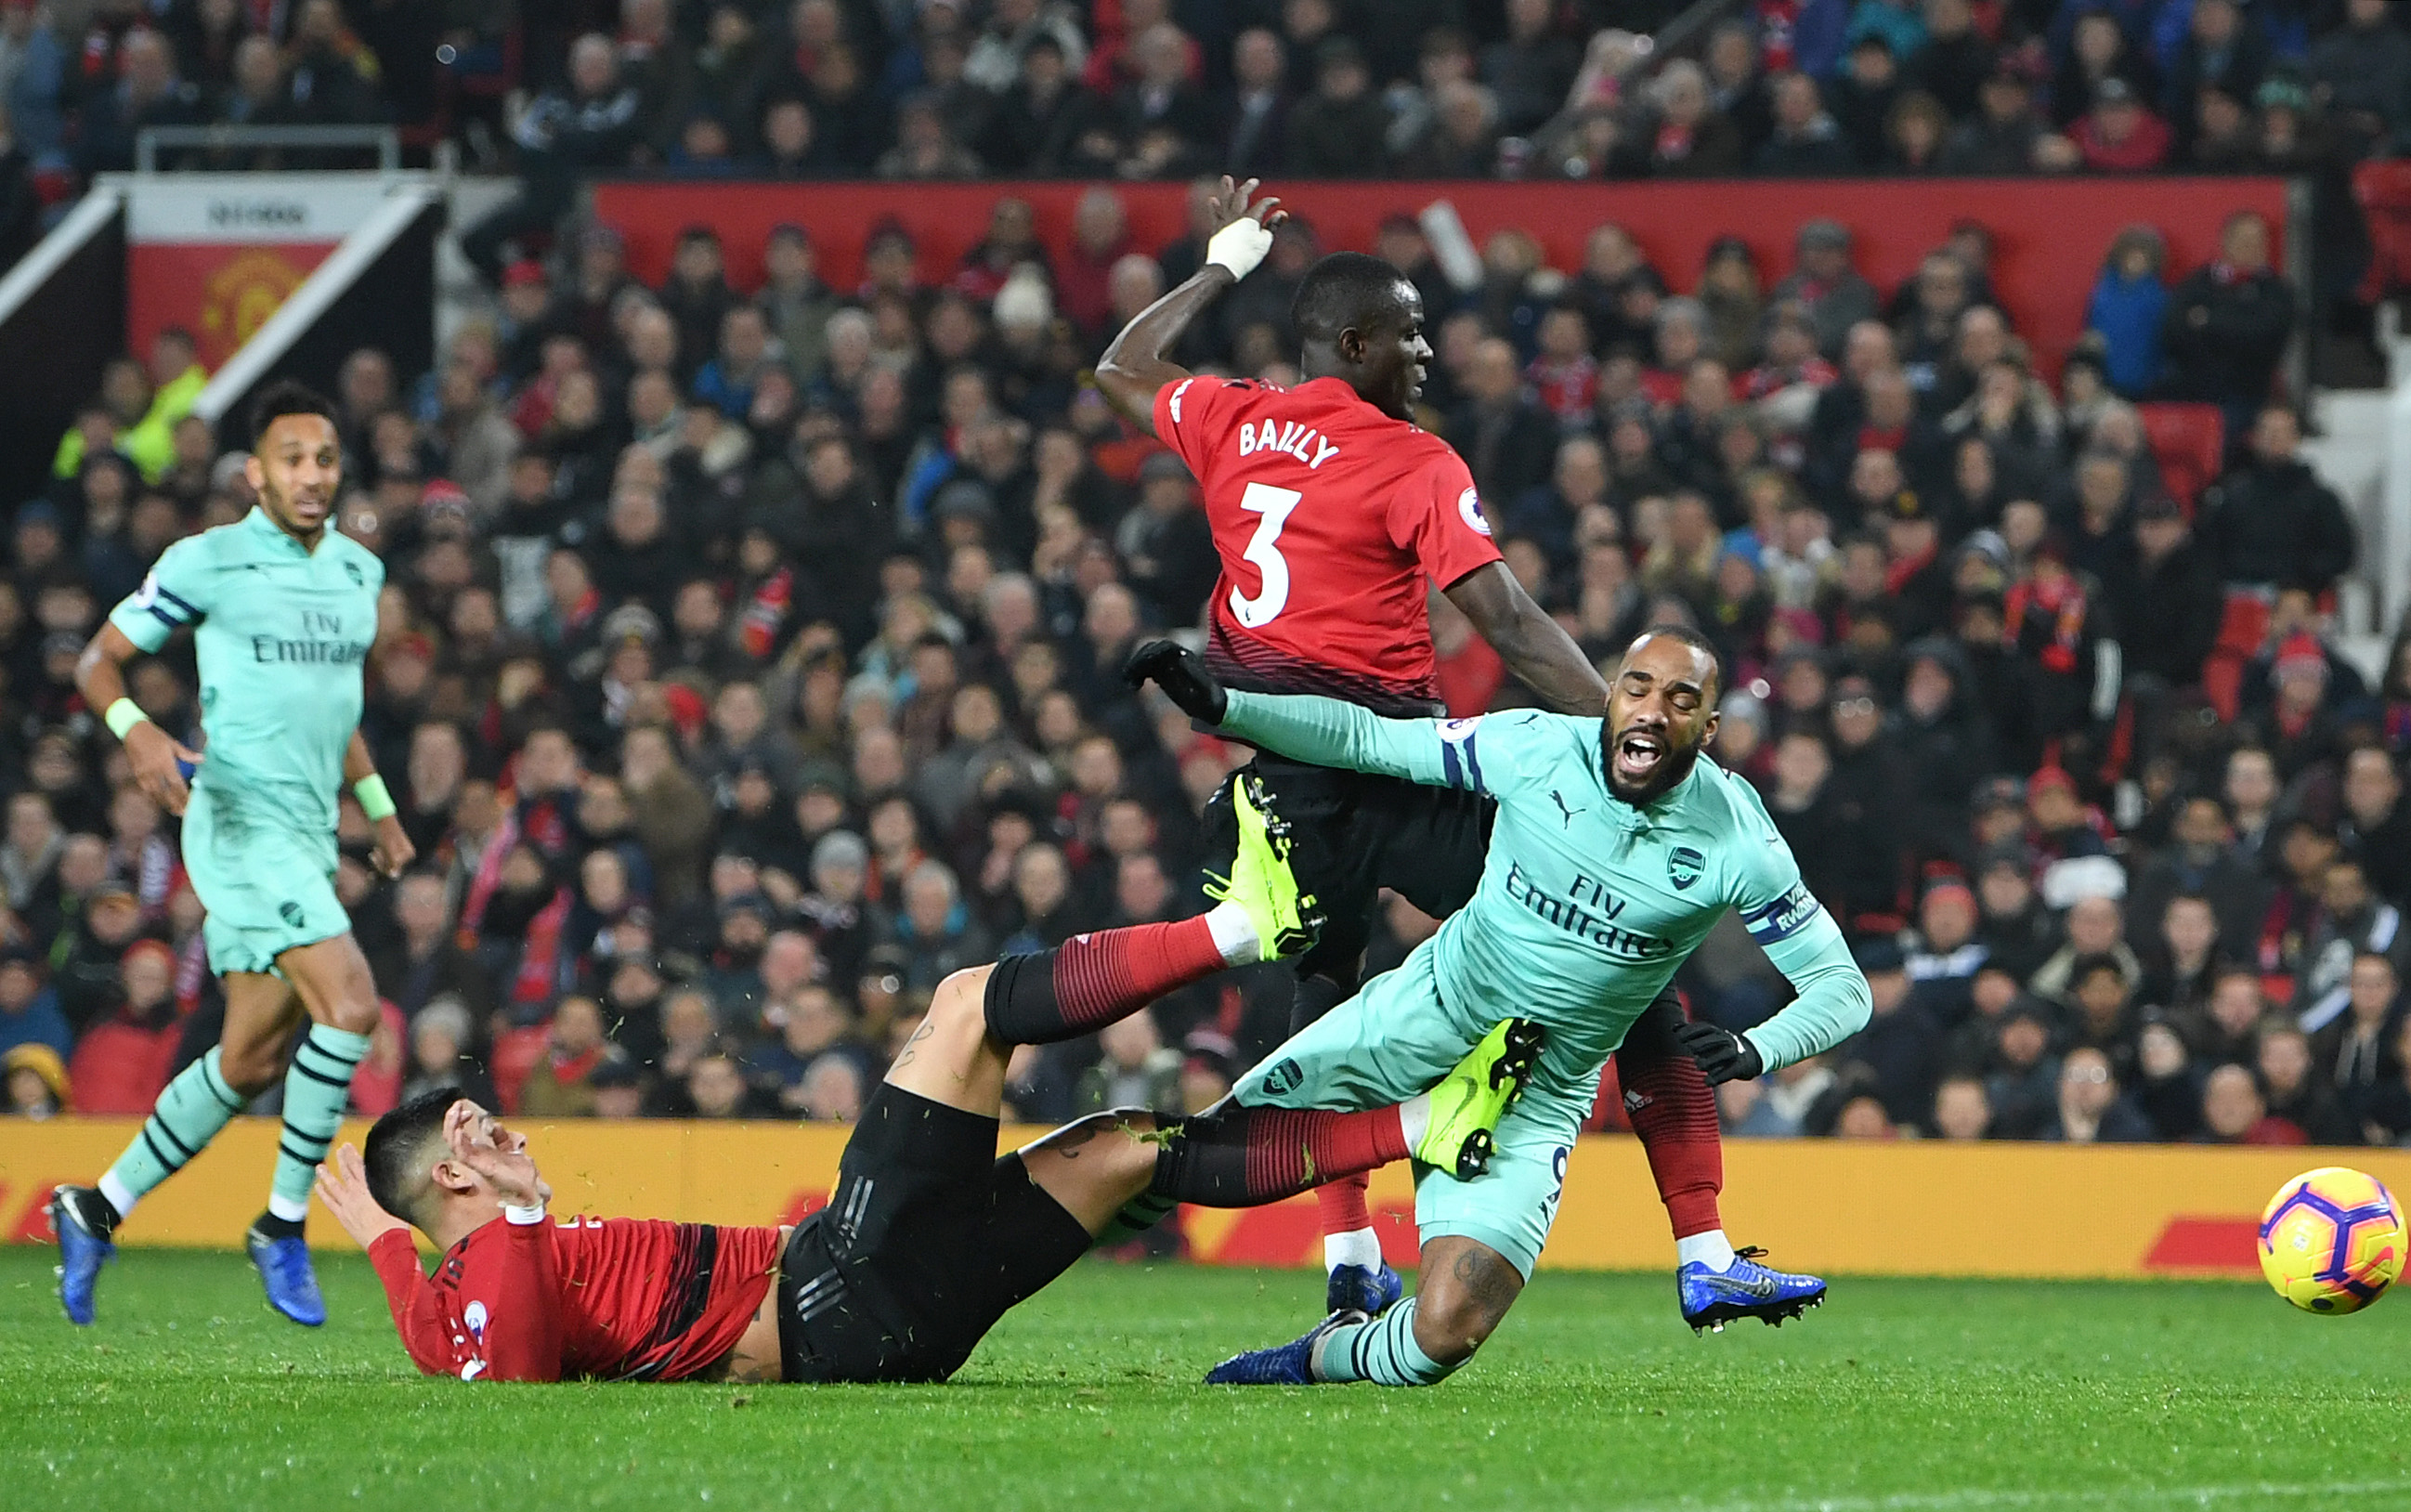 Man U vs Arsenal Highlights: Lacazette's Inventive Goal Attempts